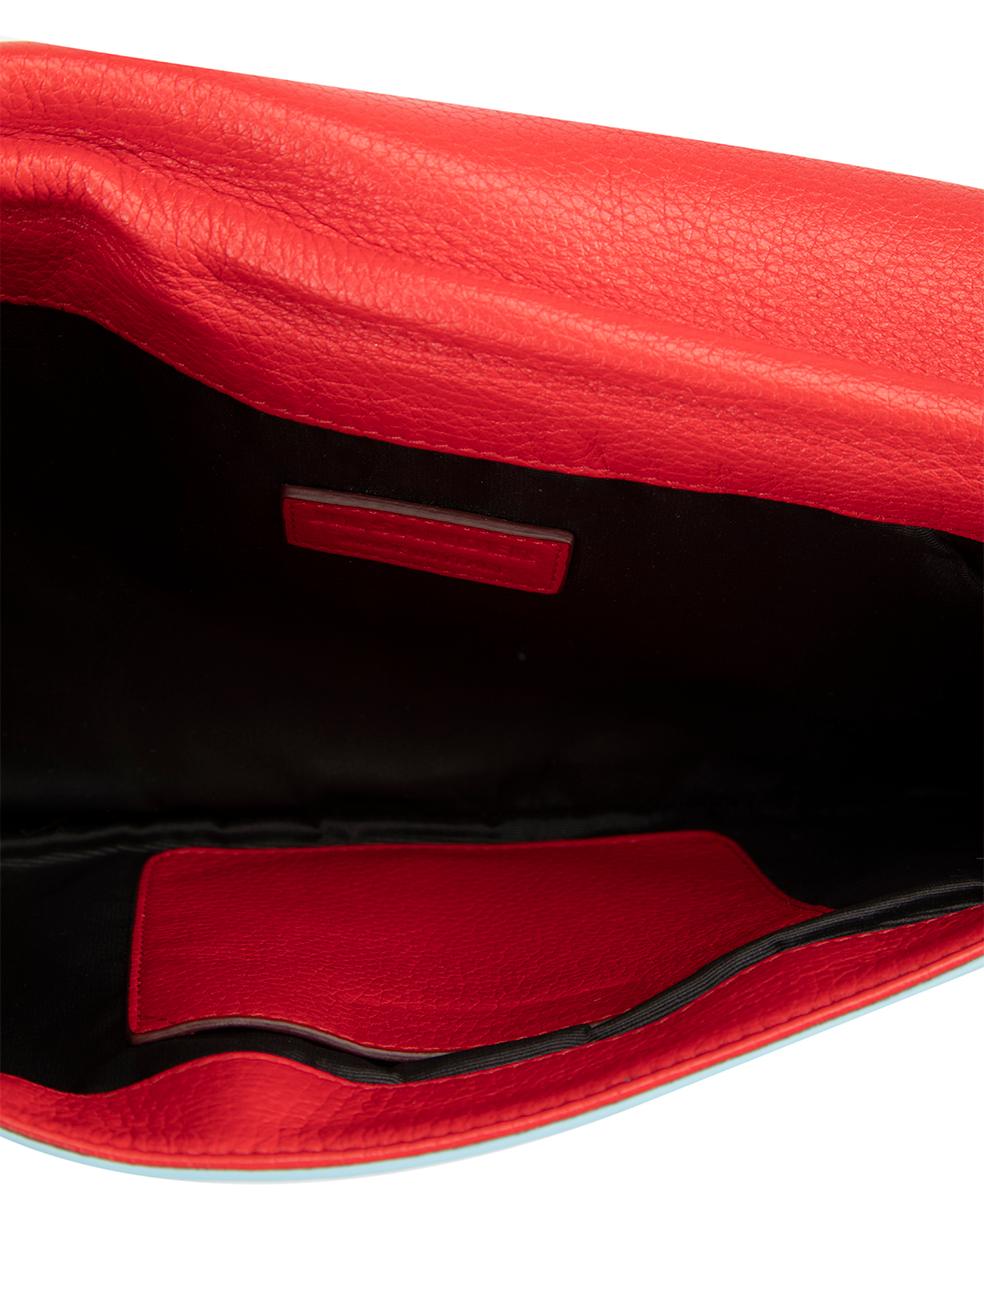 Jil Sander Women's Red & Blue Leather Colour-Block Leather Clutch 3